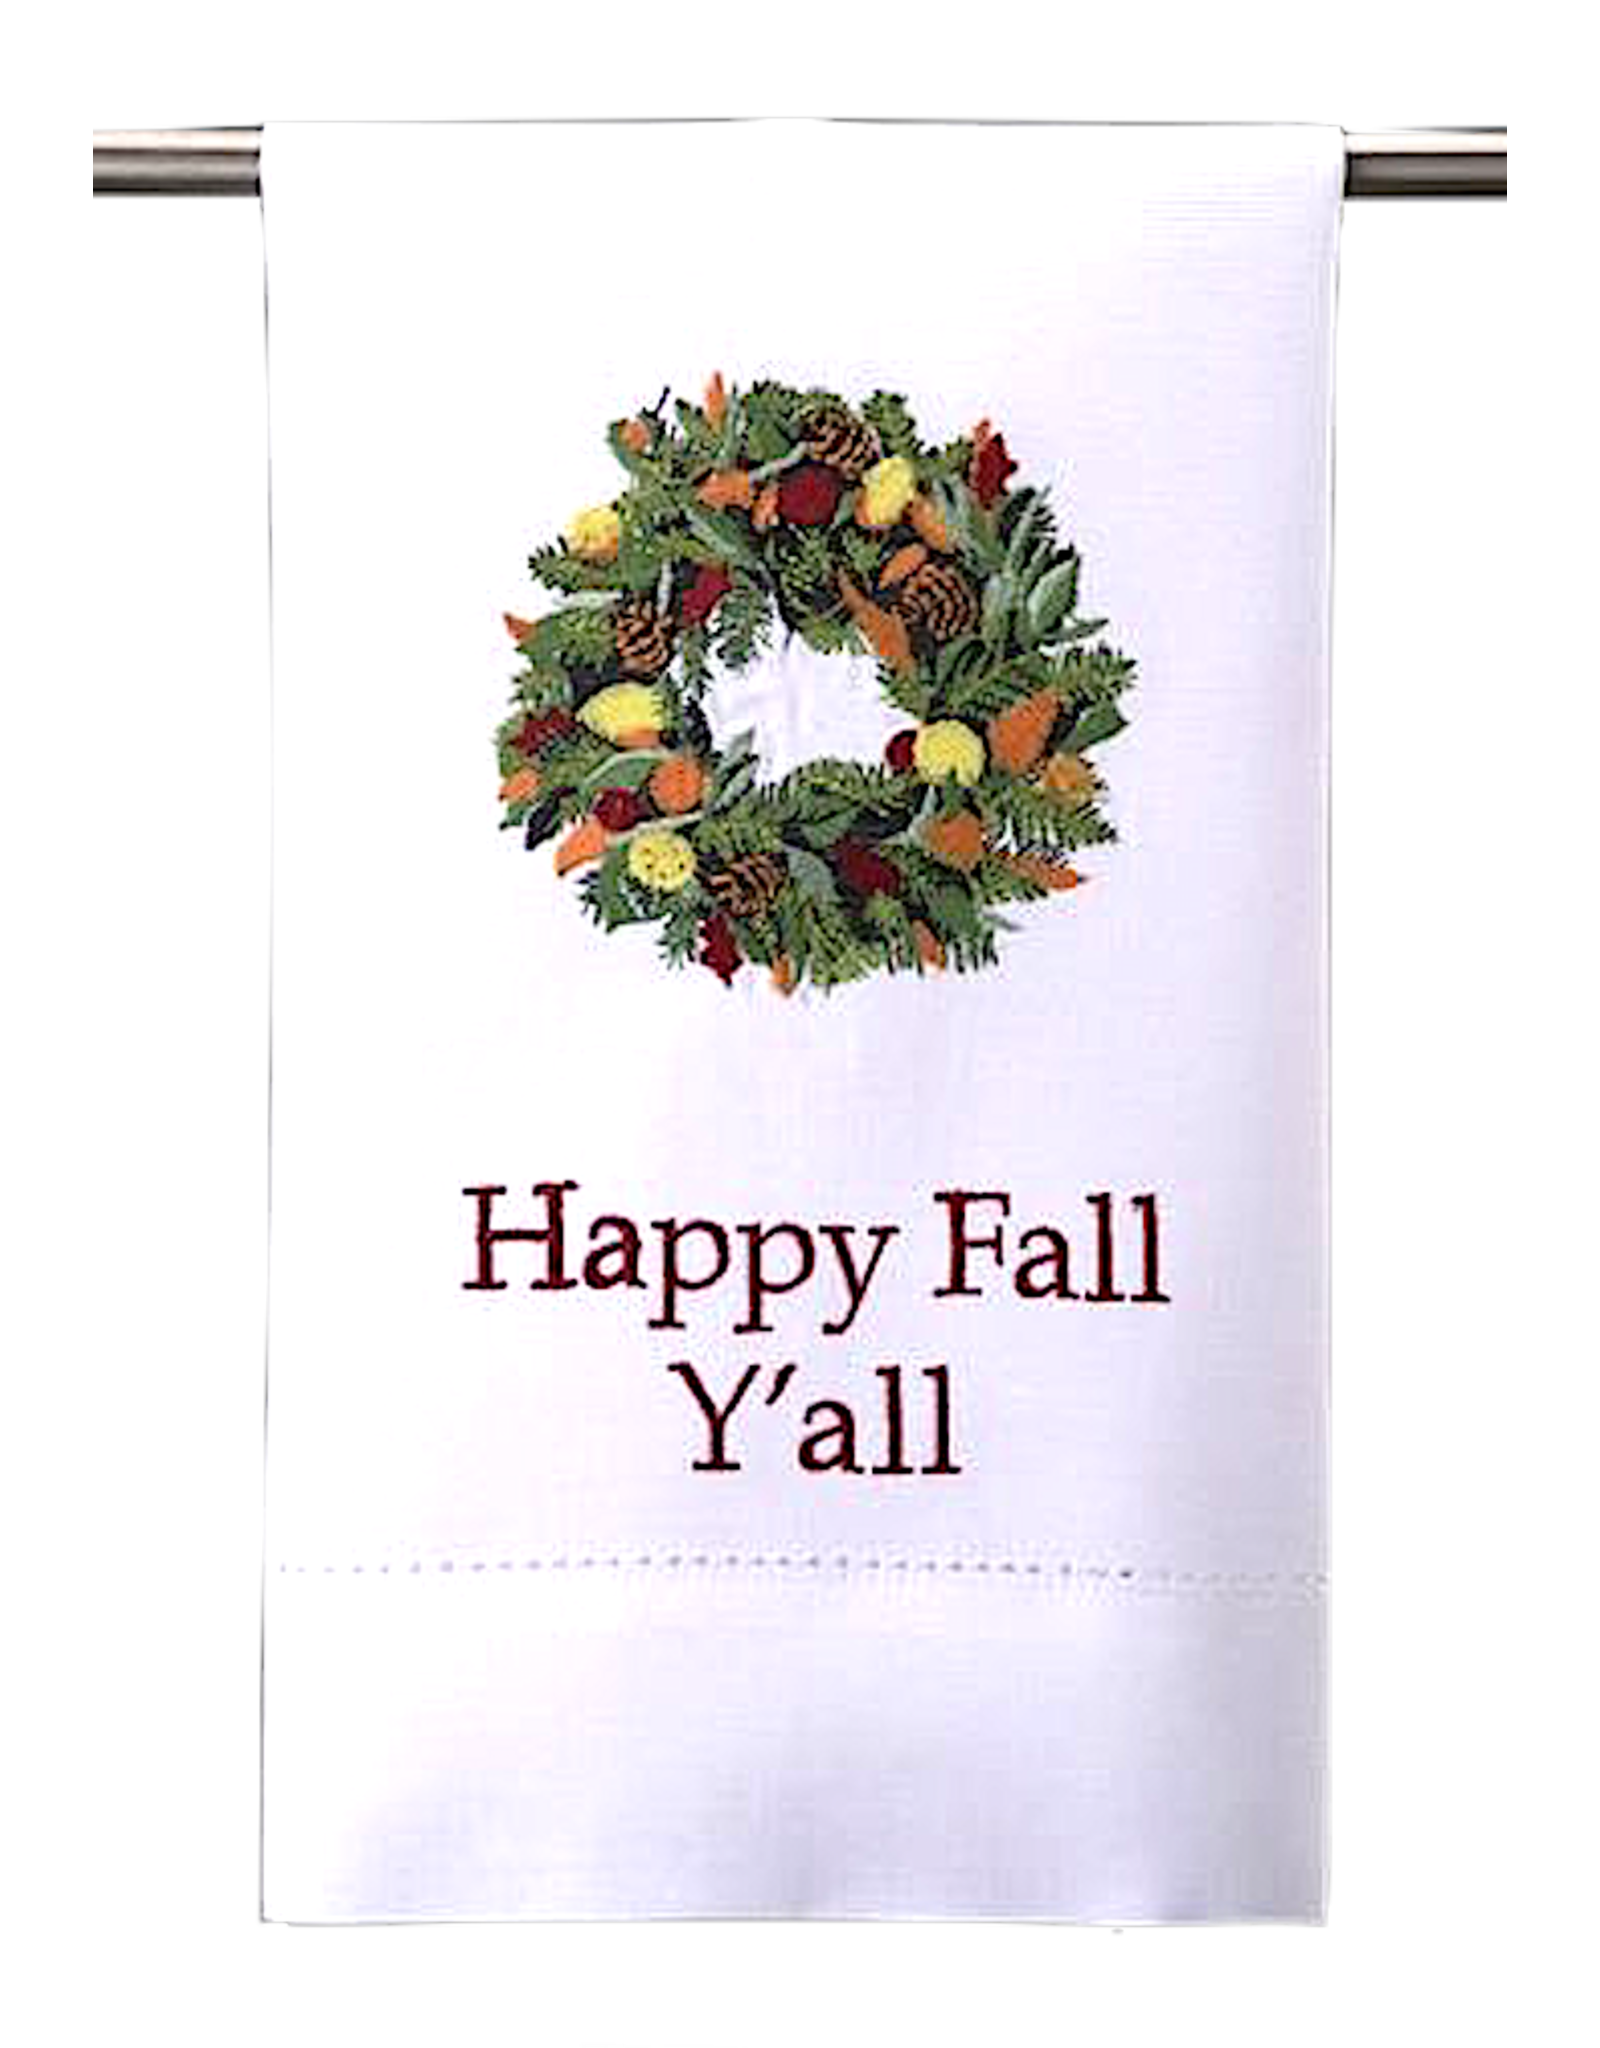 Peking Handicraft Thanksgiving Towel Fall Wreath Happy Fall Yall 14x22